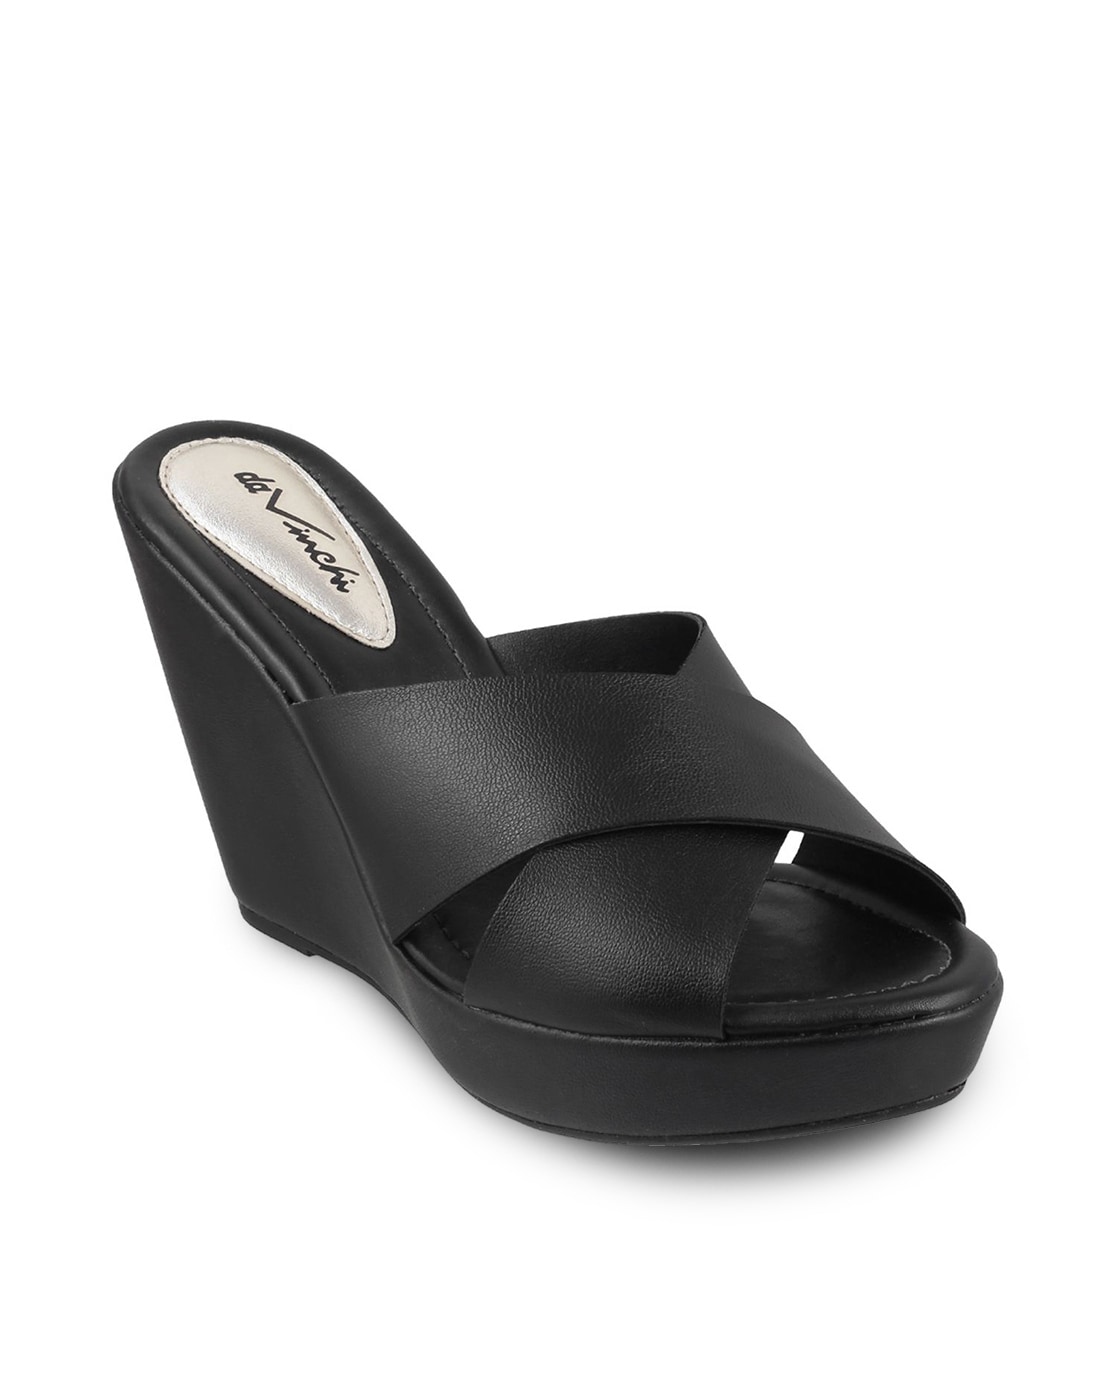 Coach Signature Jan Crinkle Platform Sandal Shoes Black Patent Leather Wedge  9.5 | eBay